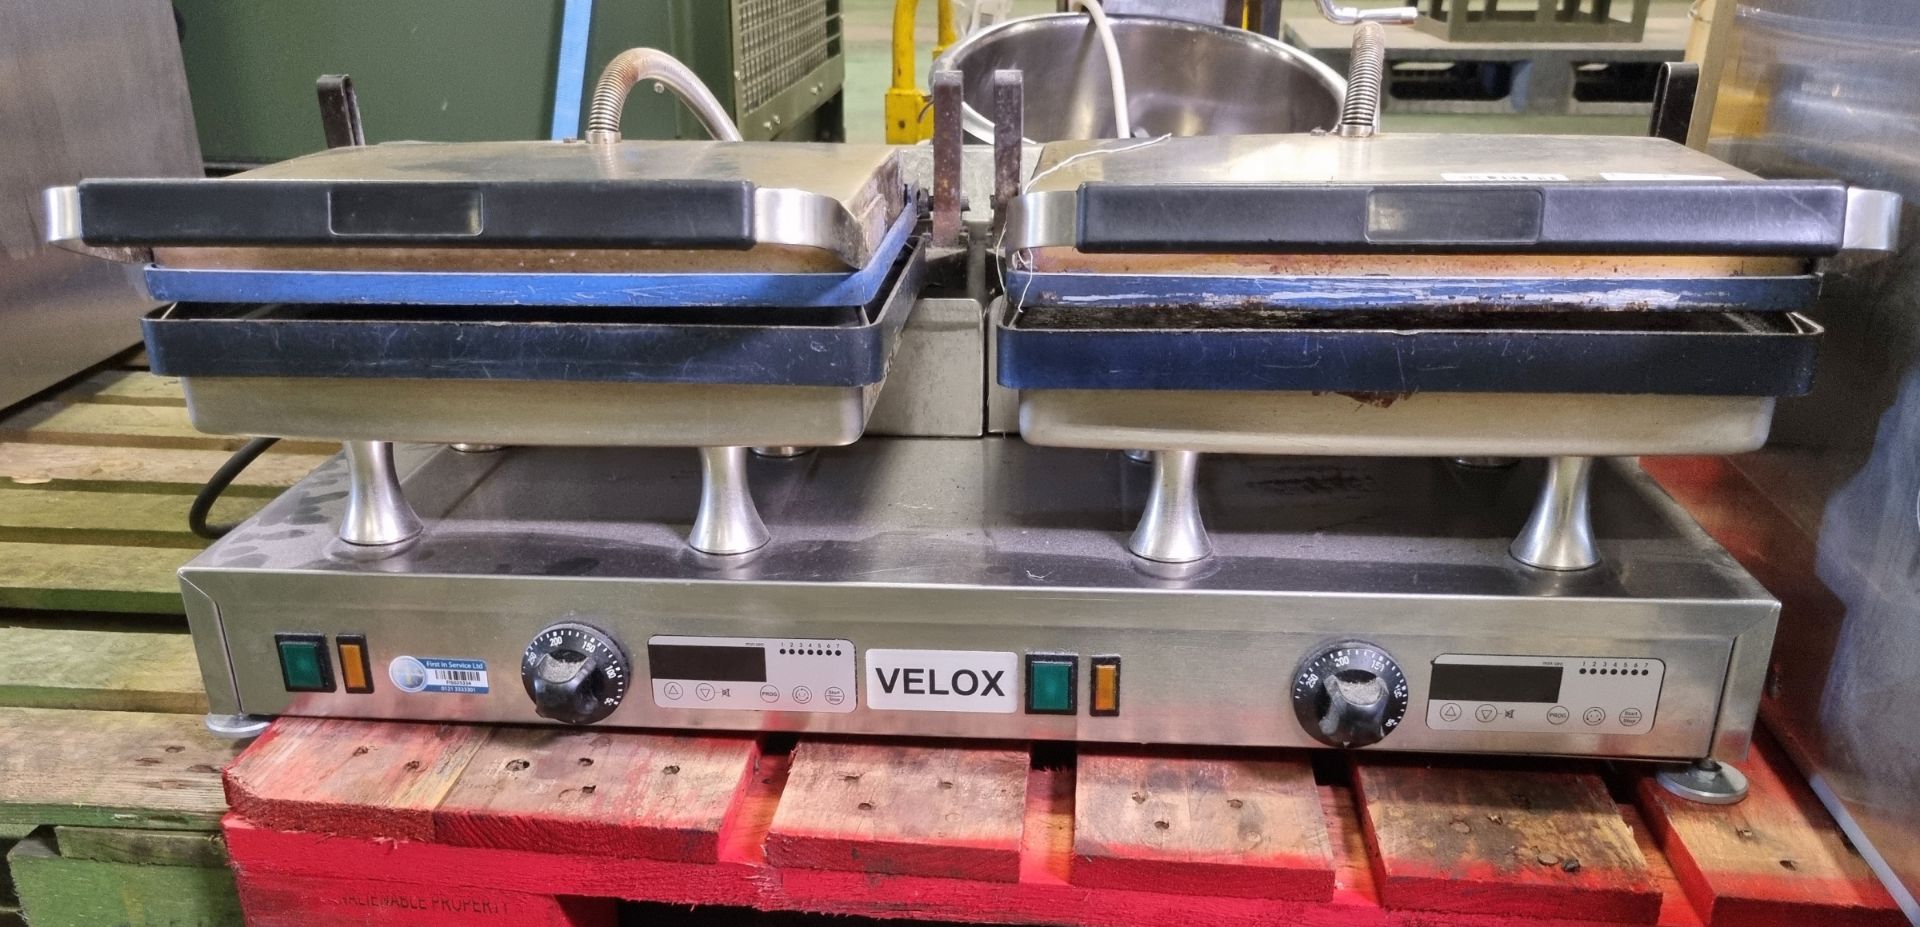 Velox Ltd CG-2 double contact/ panini grill - Image 2 of 3